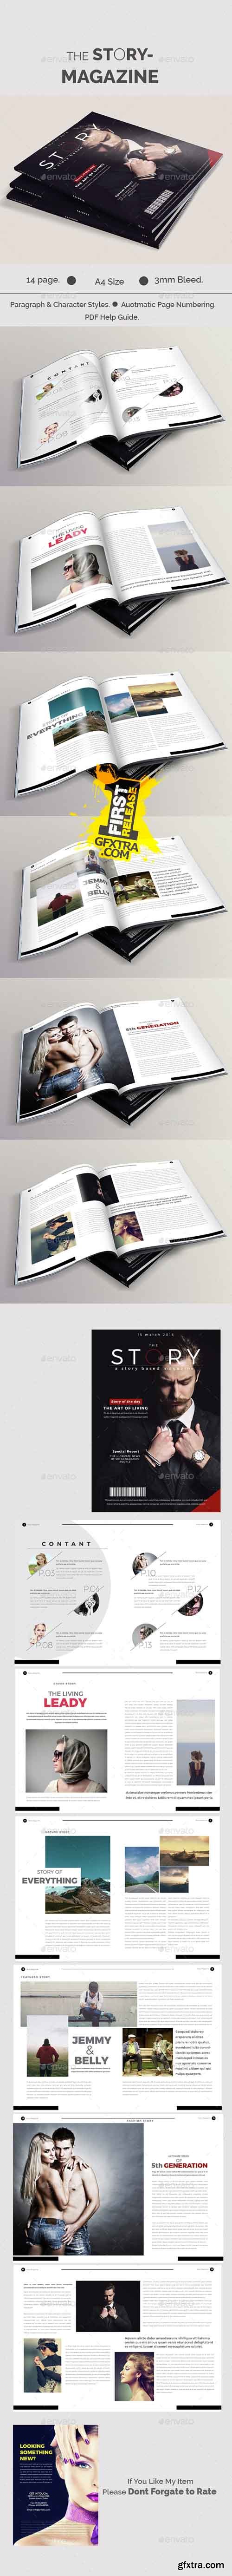 GR - The Story - Magazine 15364260